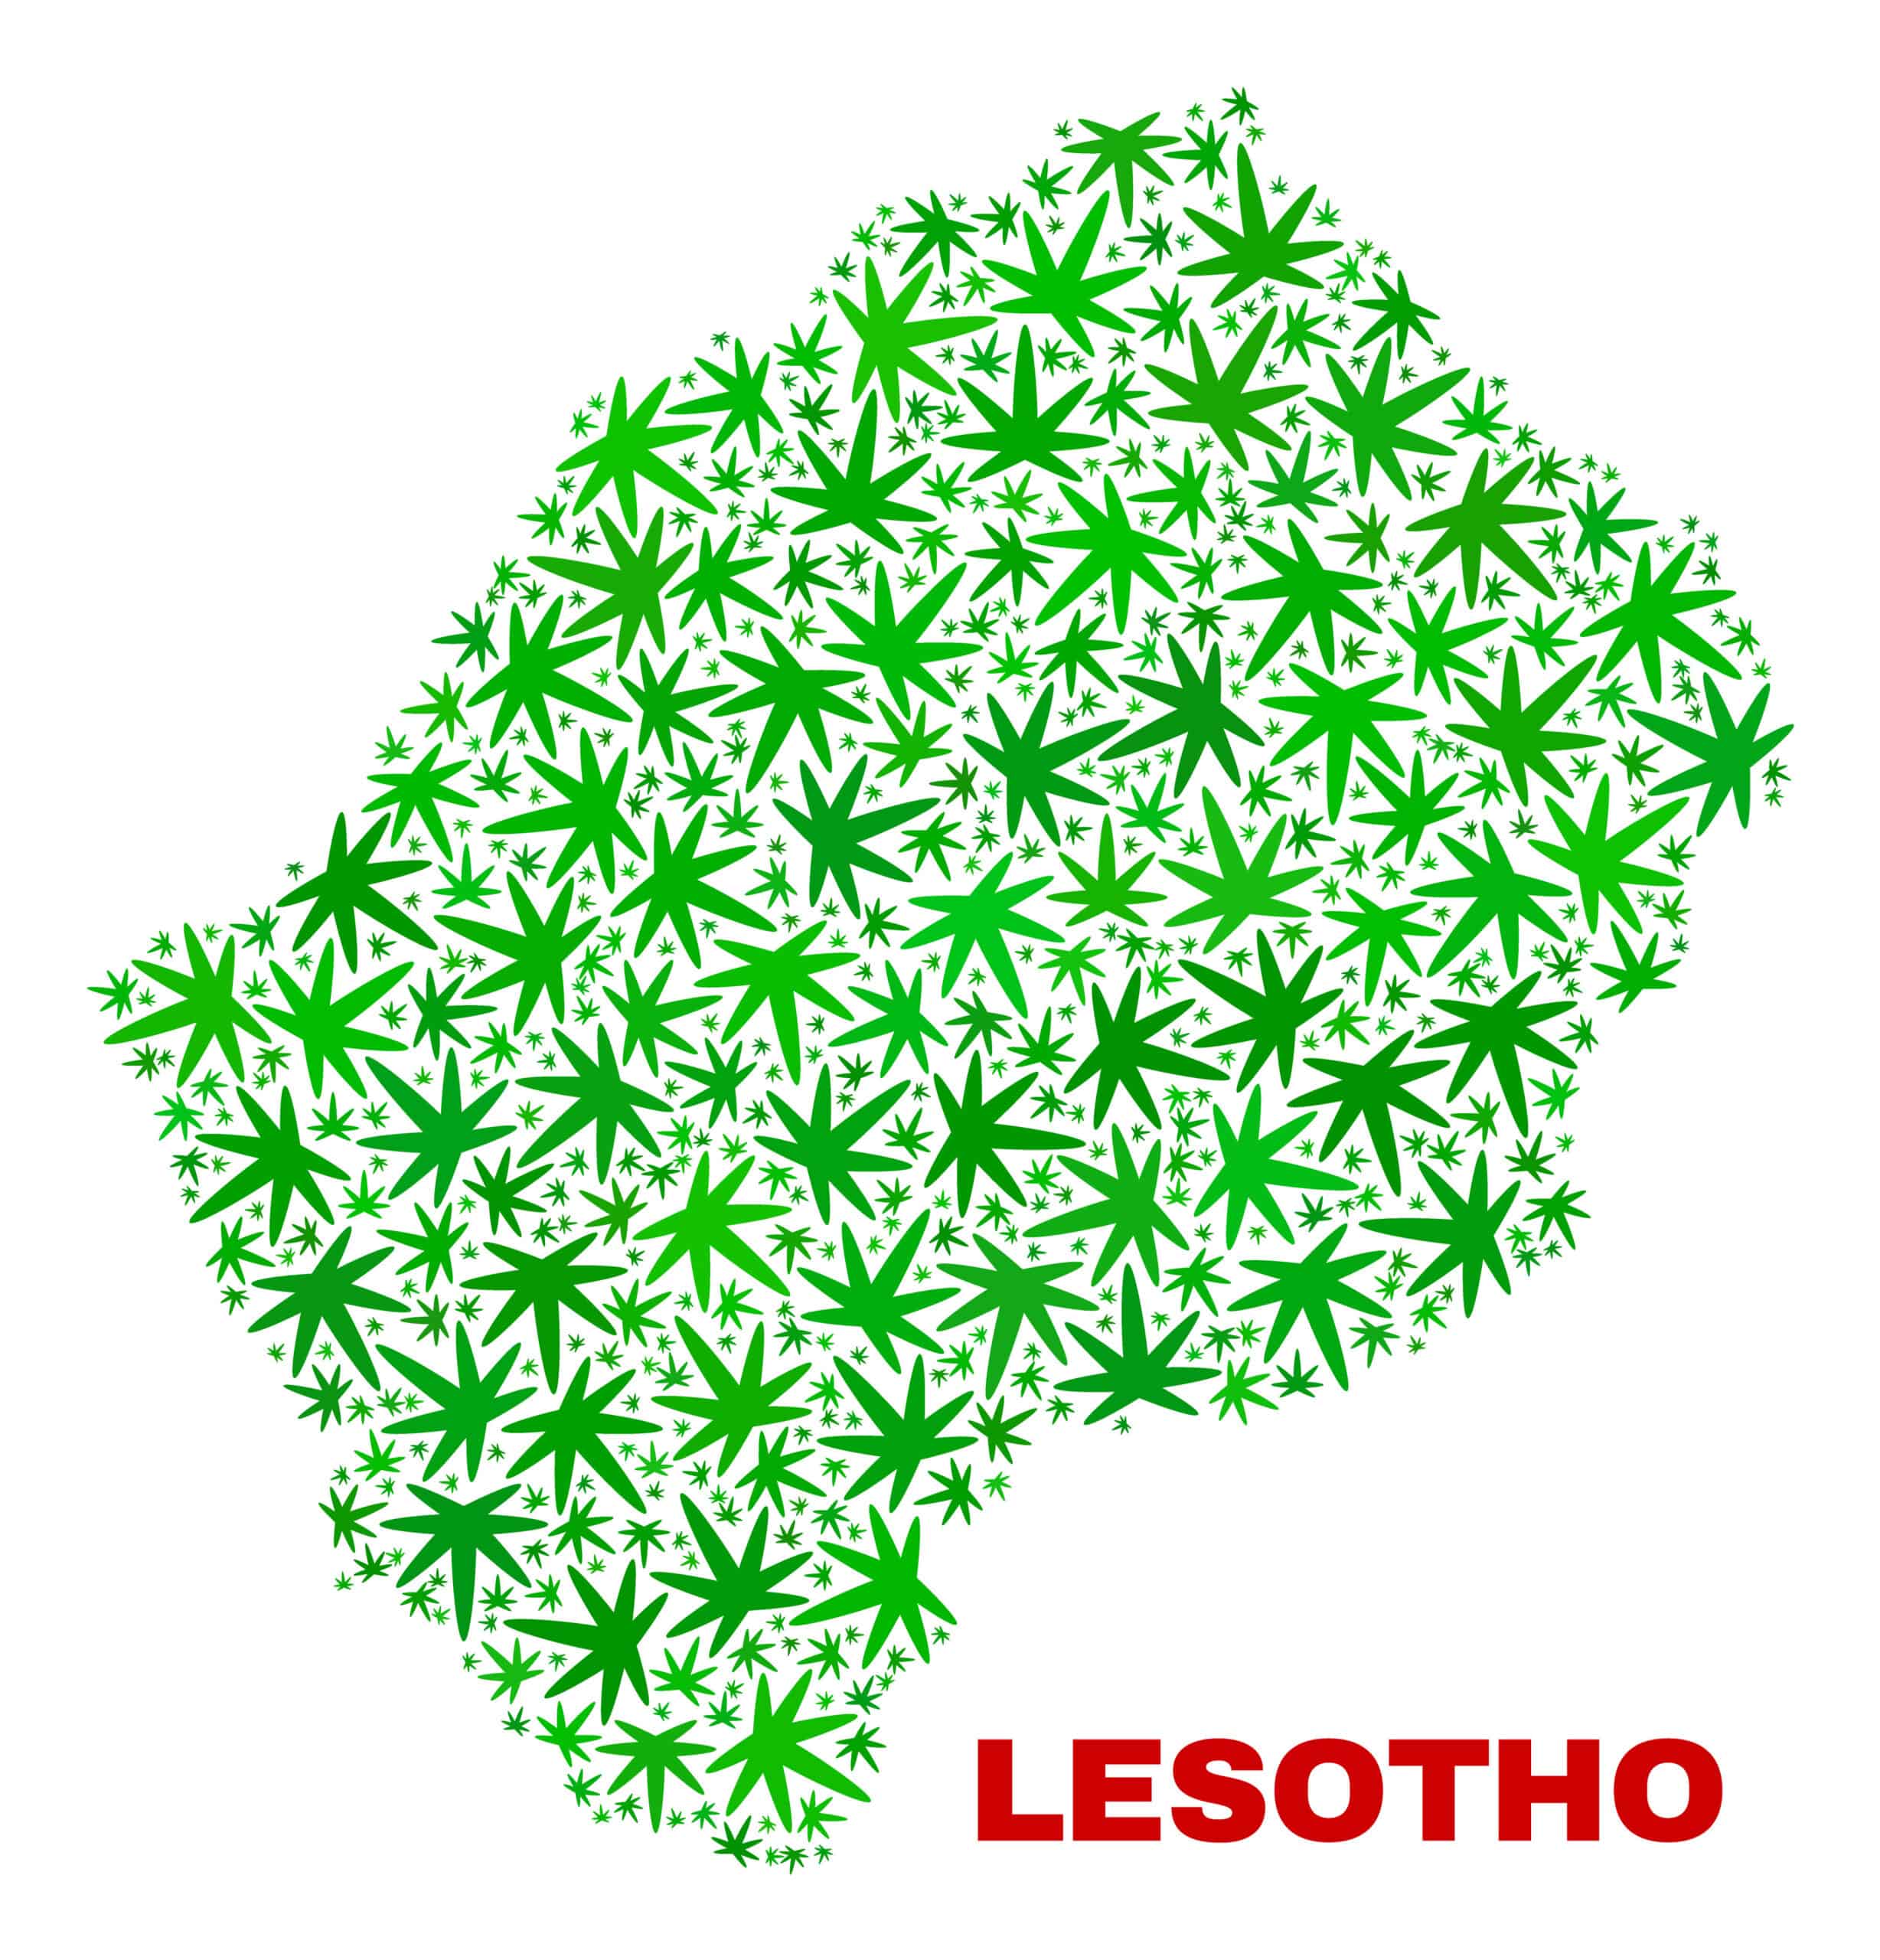 Lesotho cannabis